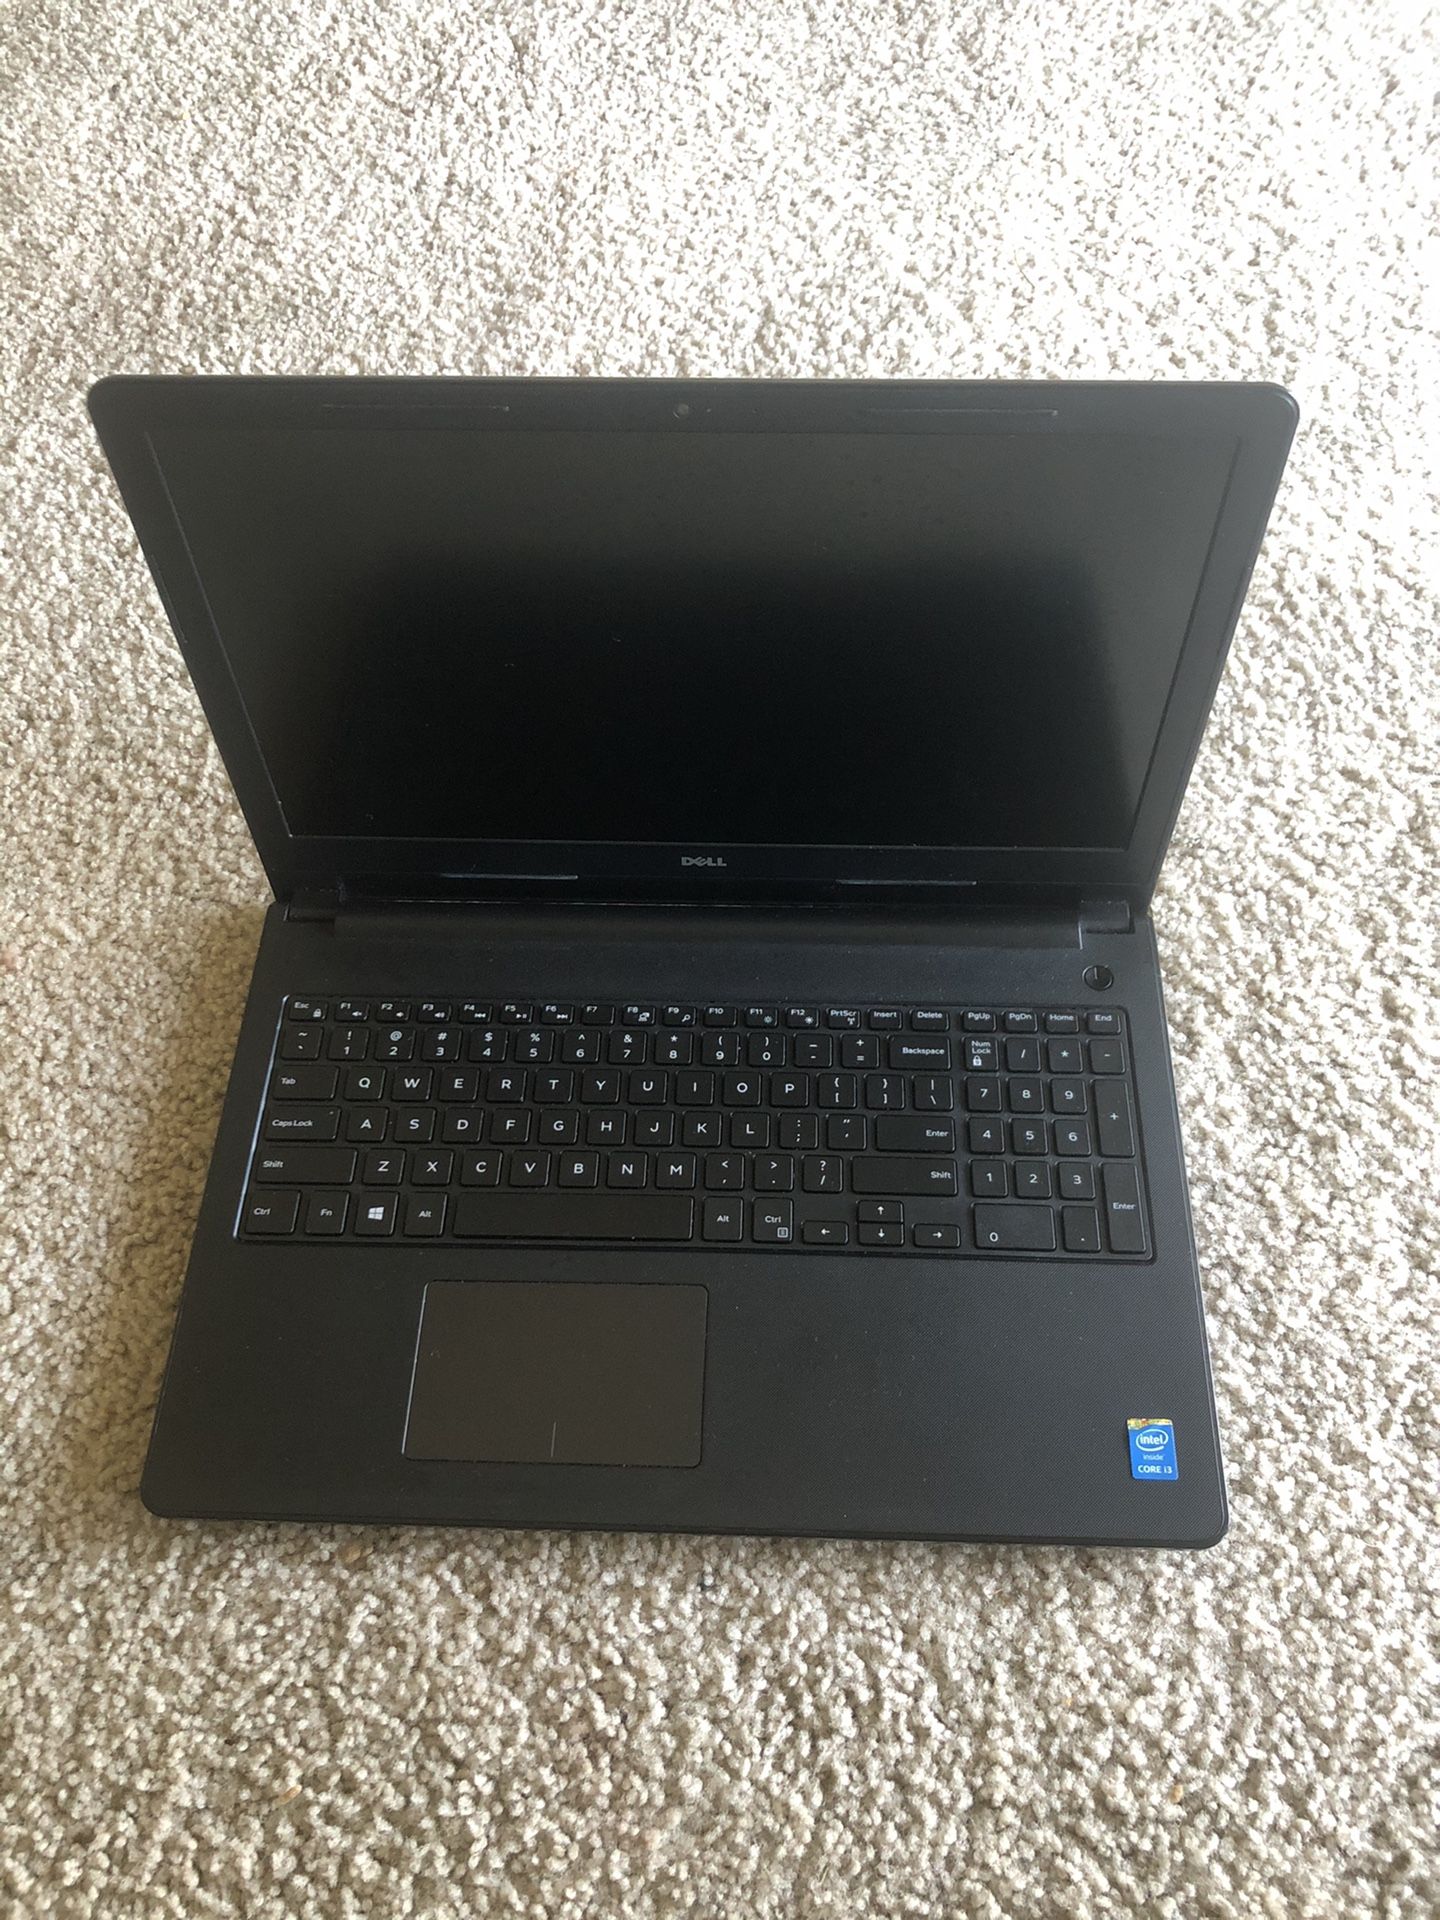 Dell ( Inspiron 15 3000 Laptop )